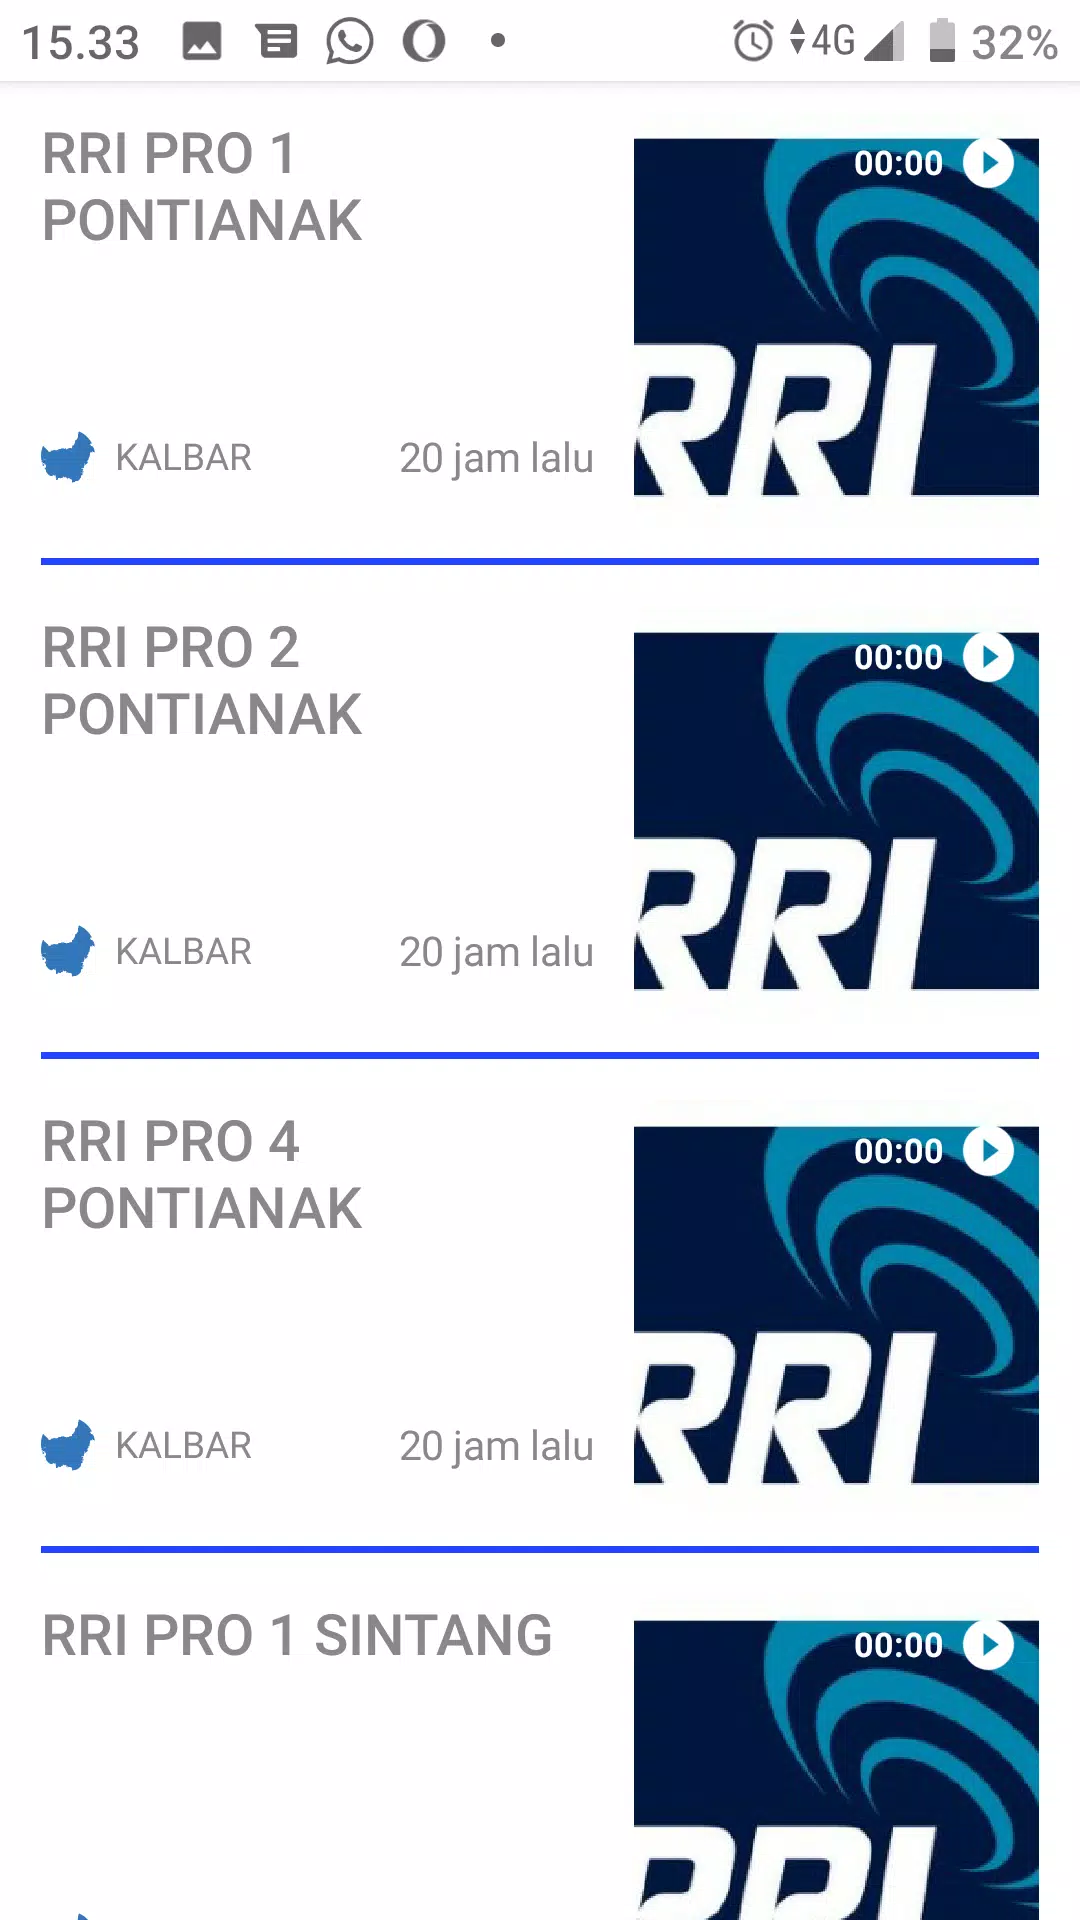 Radio Kalimantan Barat安卓版应用APK下载